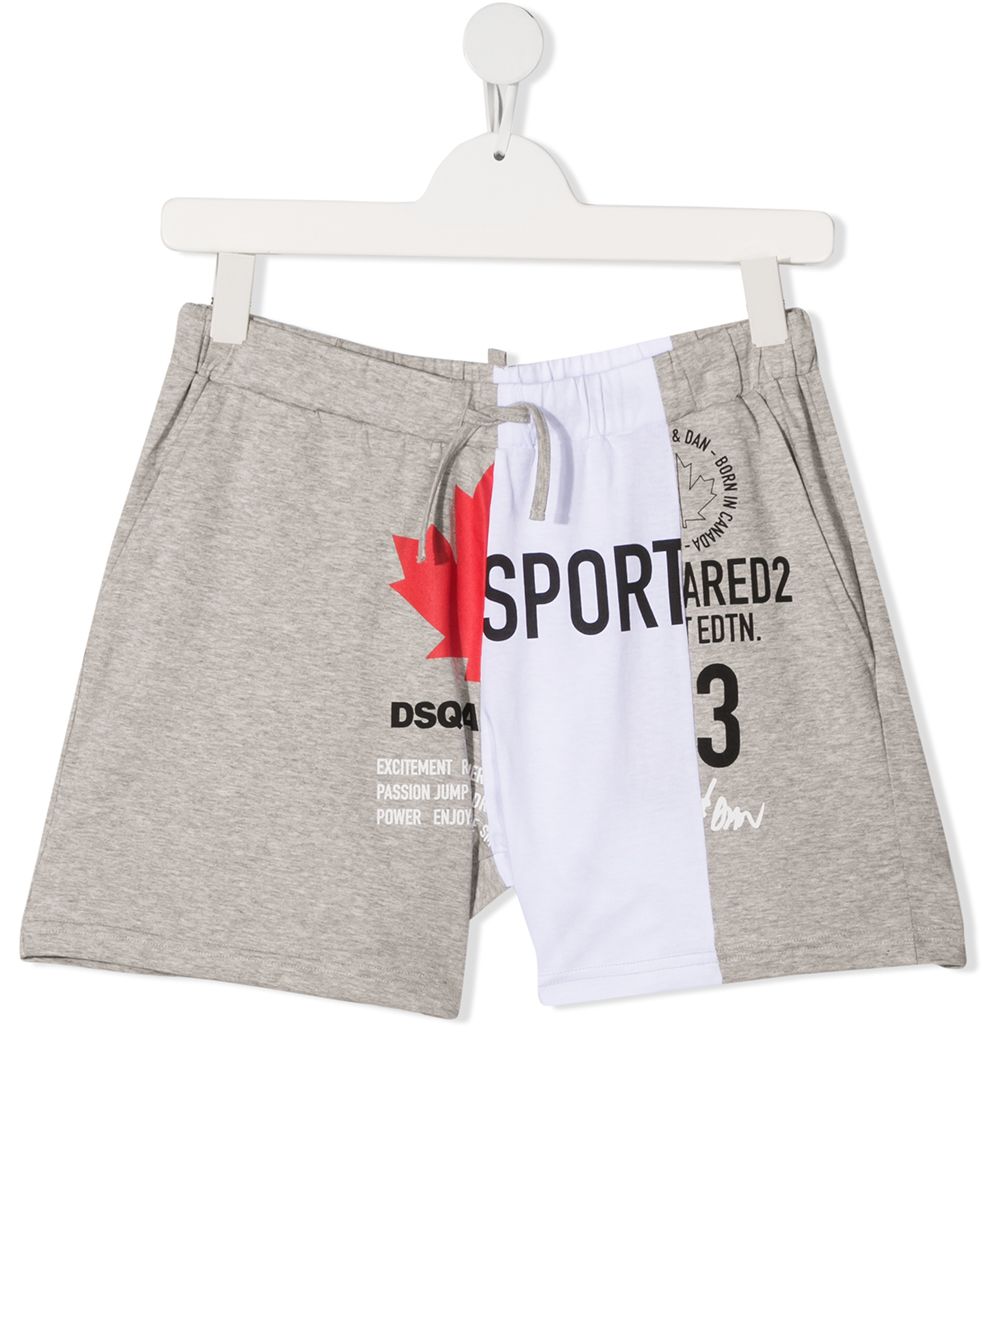 Dsquared2 Kids TEEN Sport Edtn. 03 cotton shorts - Grey von Dsquared2 Kids